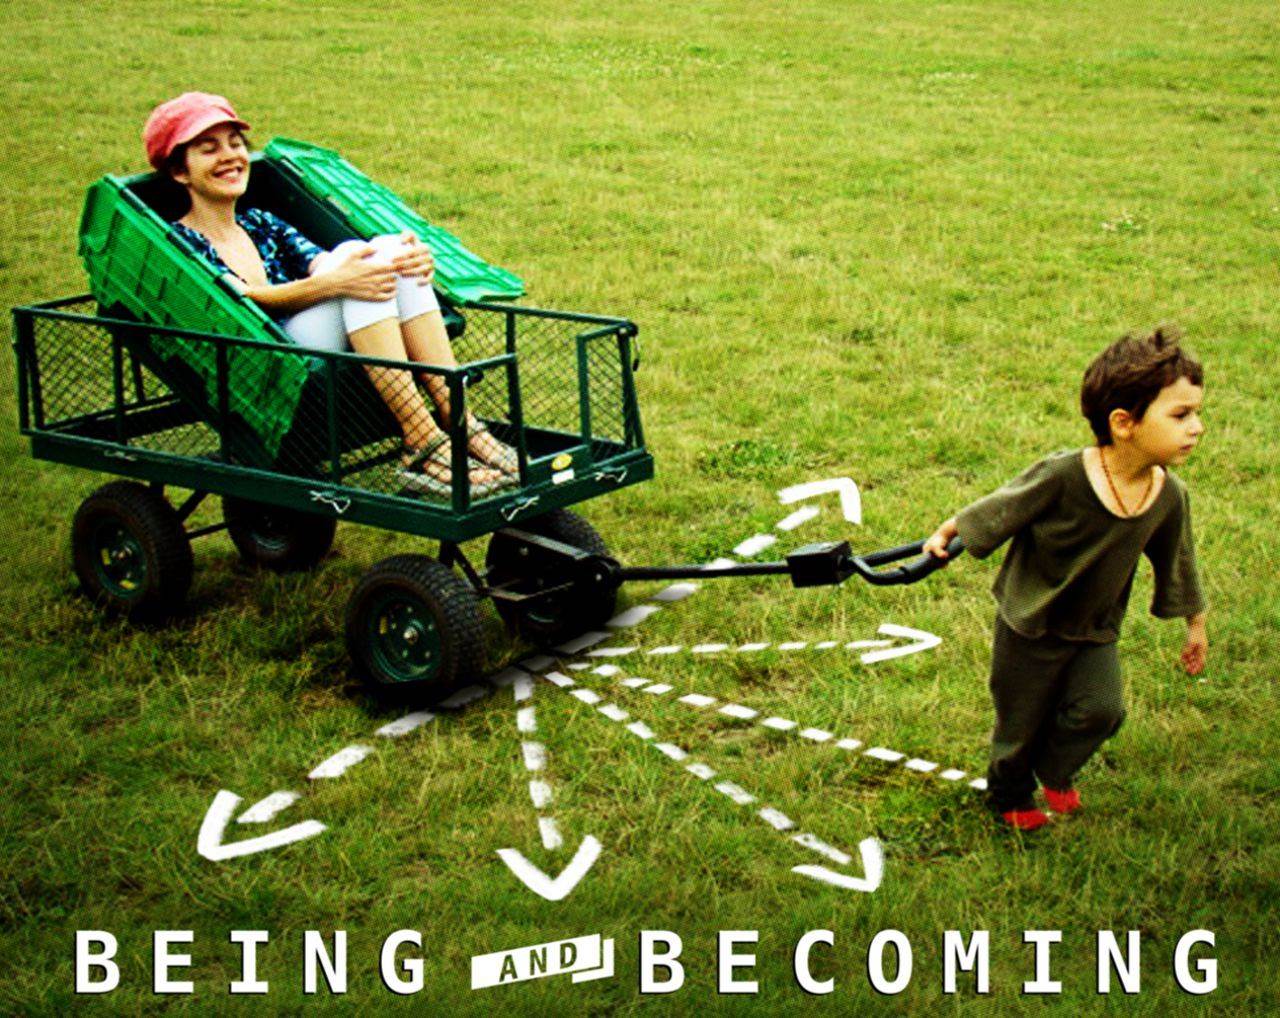 2. ASK-Filmabend "Being and Becoming", Foto: Ausschnitt Filmplakat